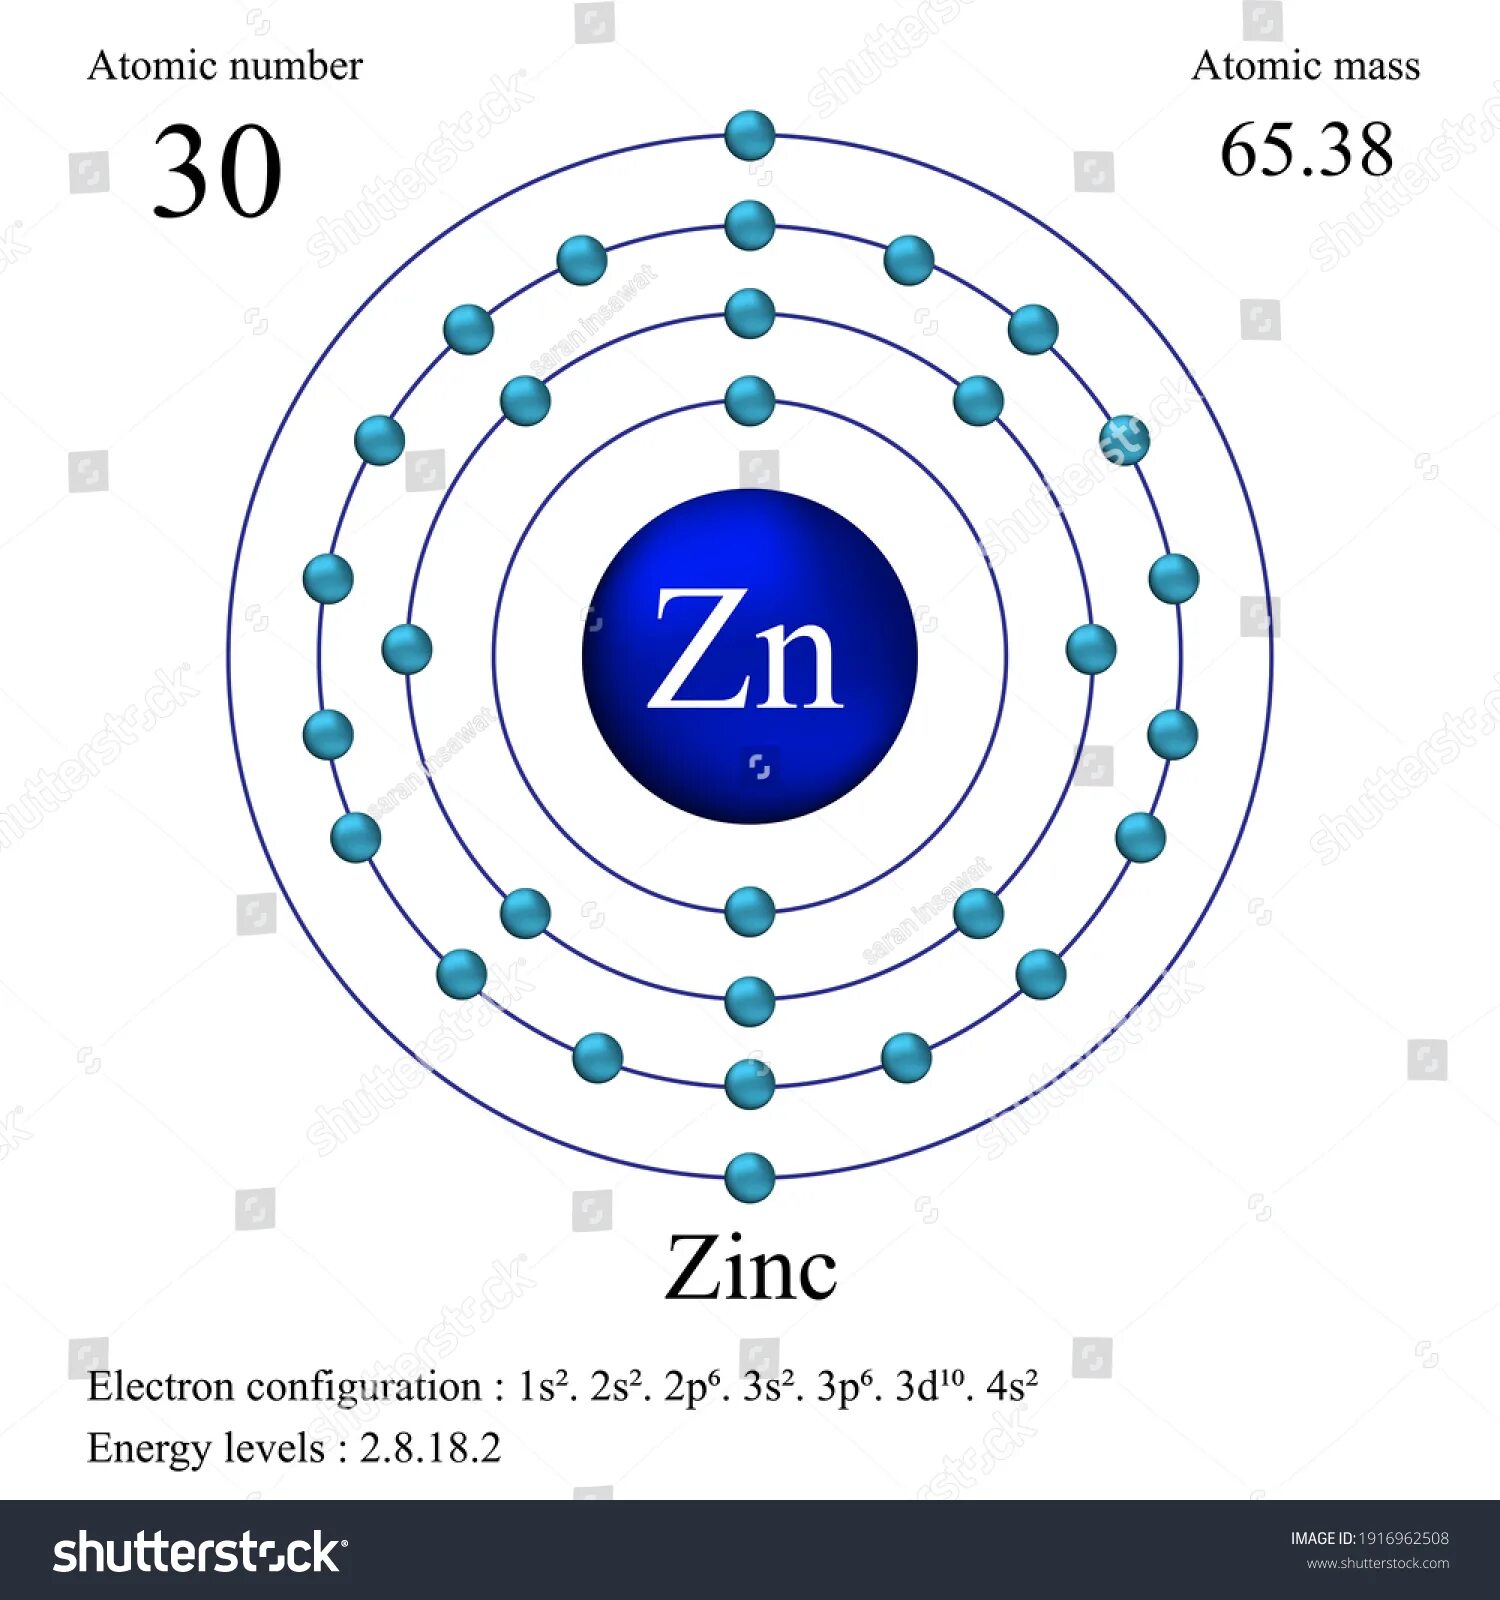 Zn 2 электроны. Электронная конфигурация цинка. SN электронная конфигурация. Электронная конфигурация олова. Модель атома цинка.